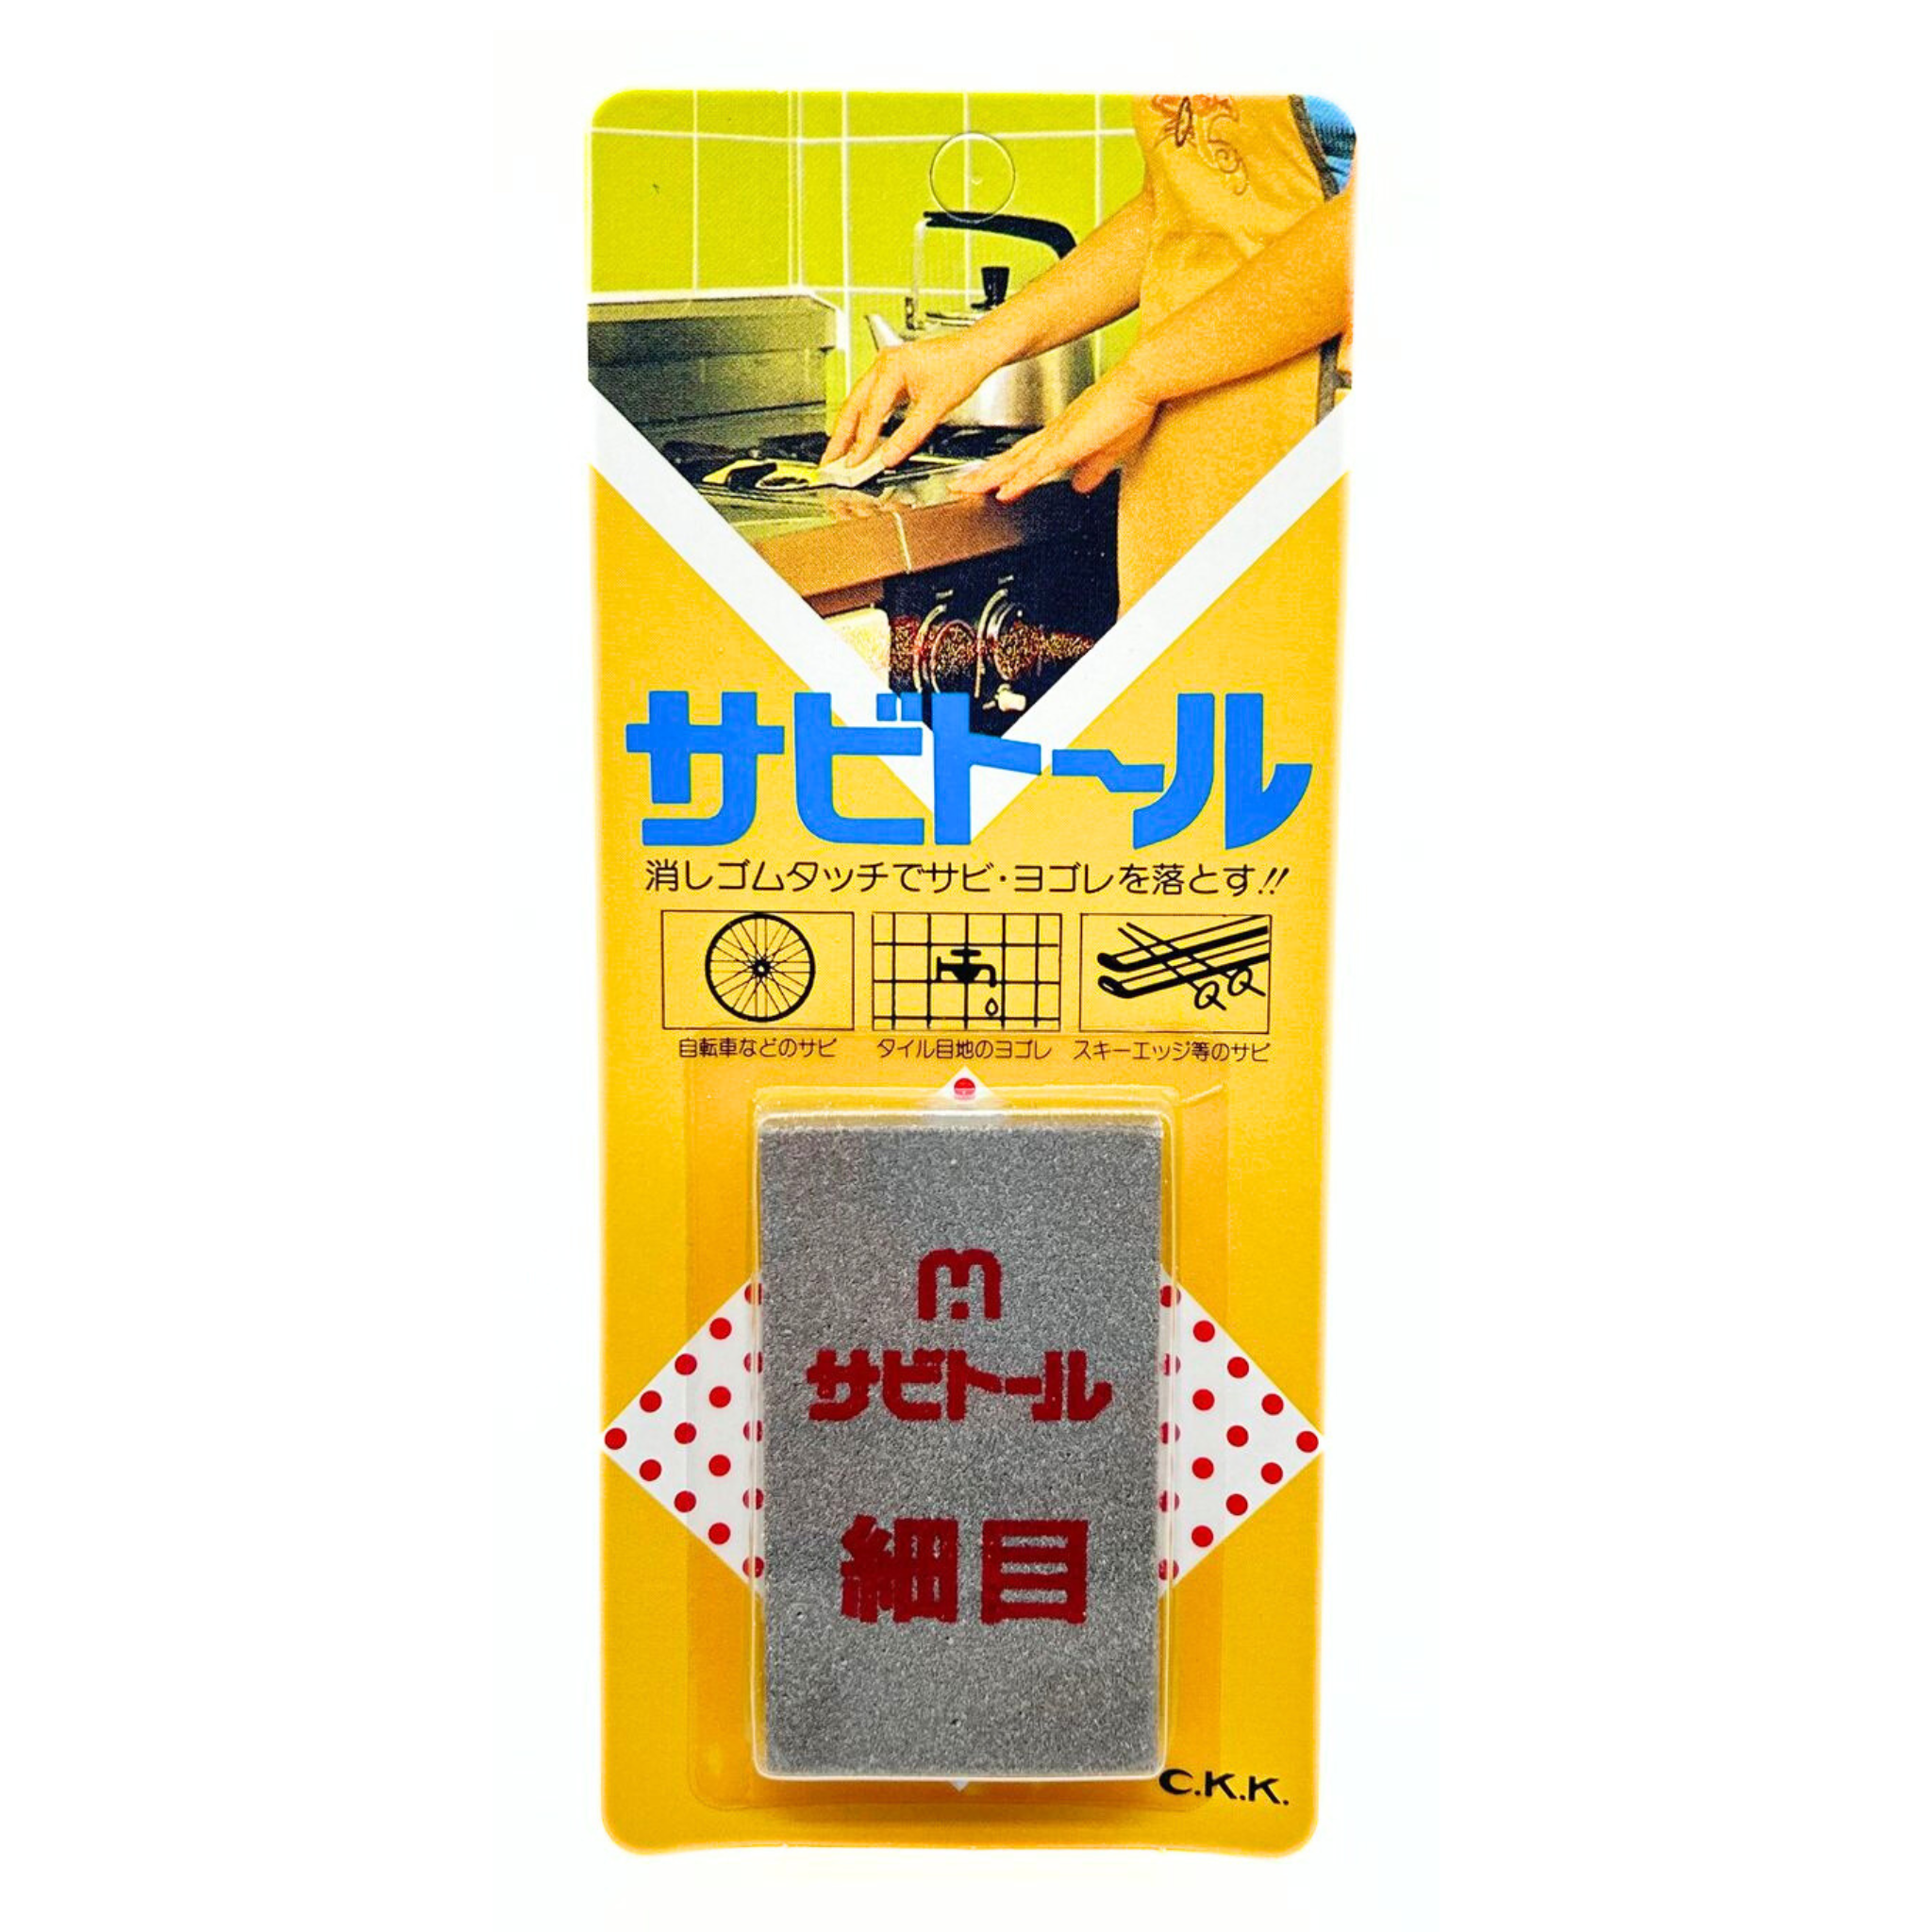 Sabitoru Rust Eraser,  Elastic Cleaner for Rust and Dirt Made in Japan